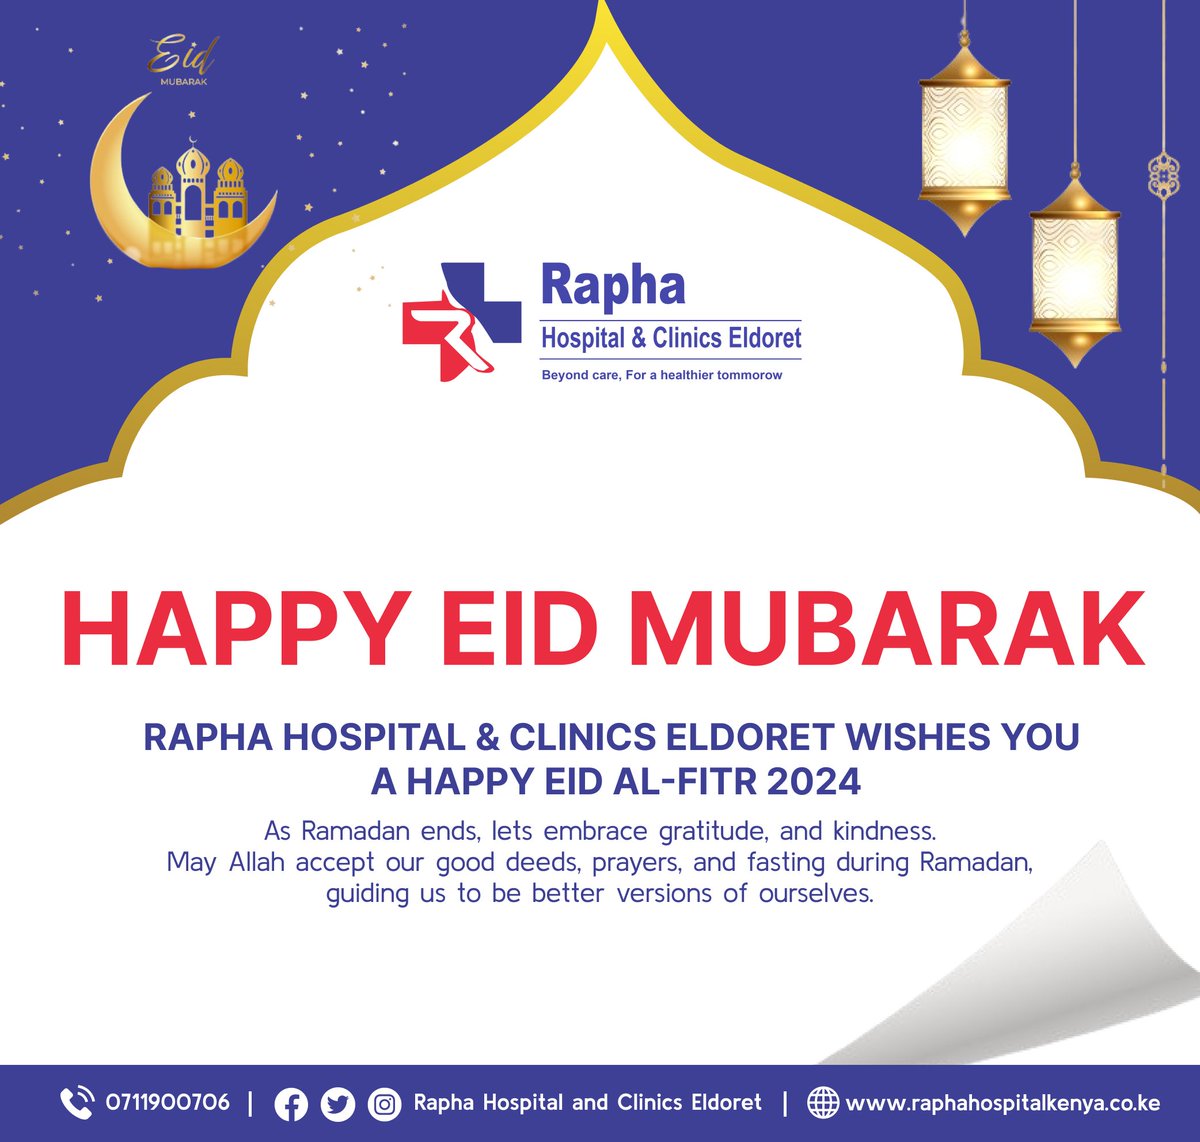 Eid Mubarak!** Celebrate health & wellness with @RaphaEldoret. Embrace the Eid spirit with gratitude & kindness. Your well-being is our joy! 
📲: 0711900706
raphahospitalkenya.co.ke
raphahospitalkenya.co.ke

#EidMubarak #RaphaCares #HealthierTomorrow #Eldoret